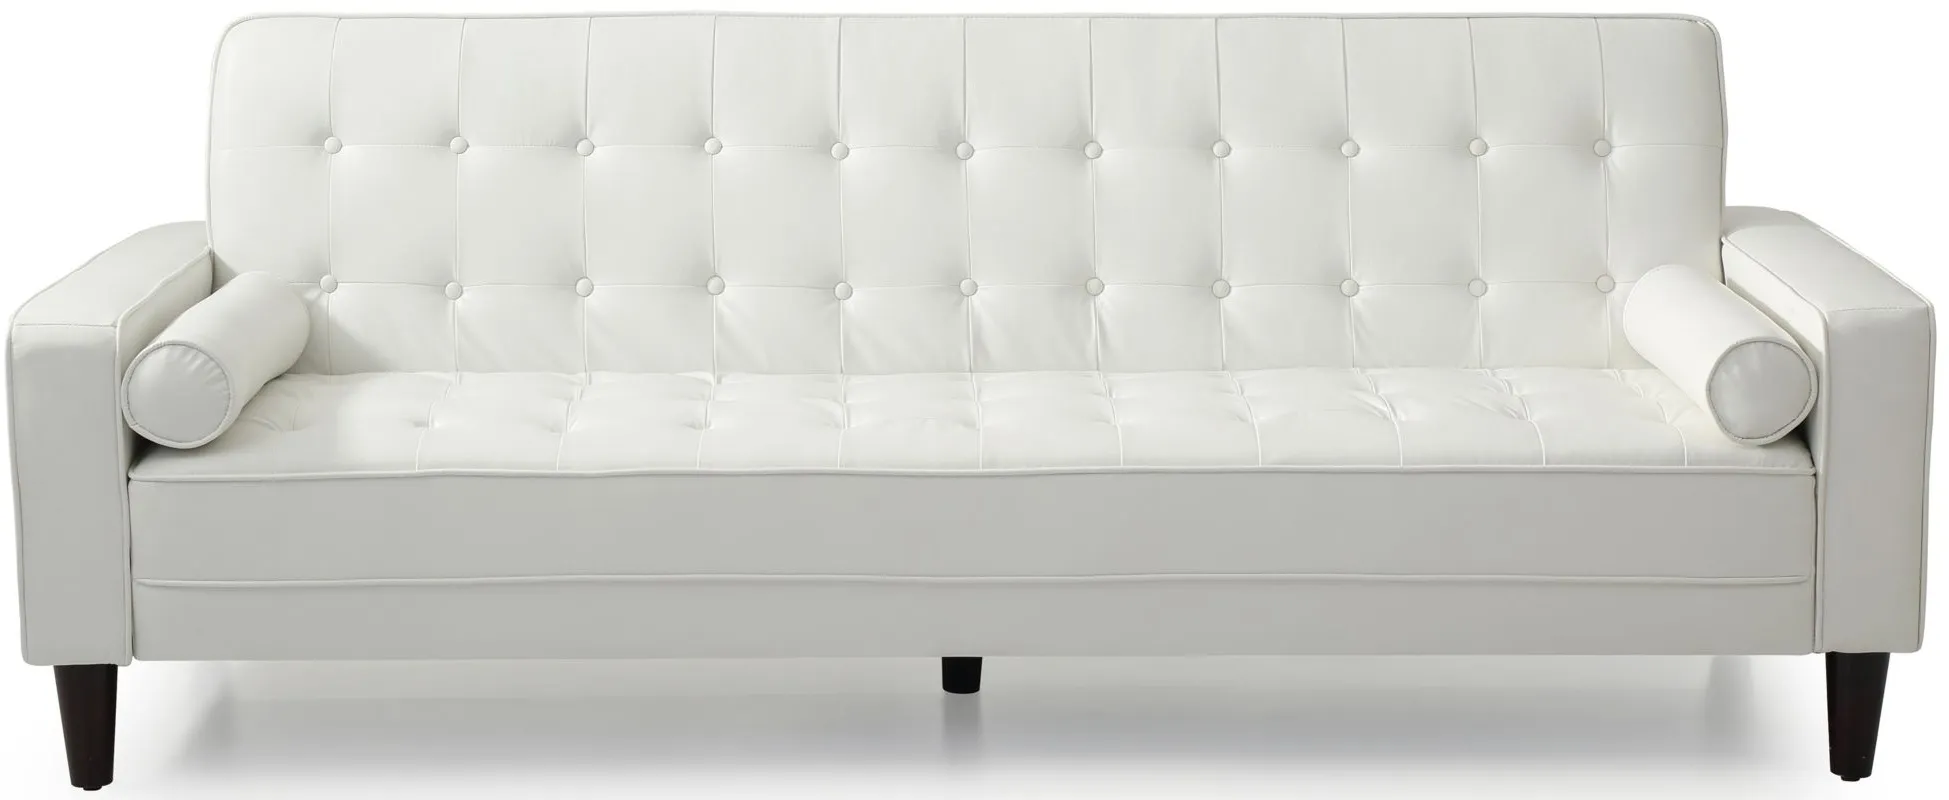 Andrews Klik Klak Sofa in White by Glory Furniture